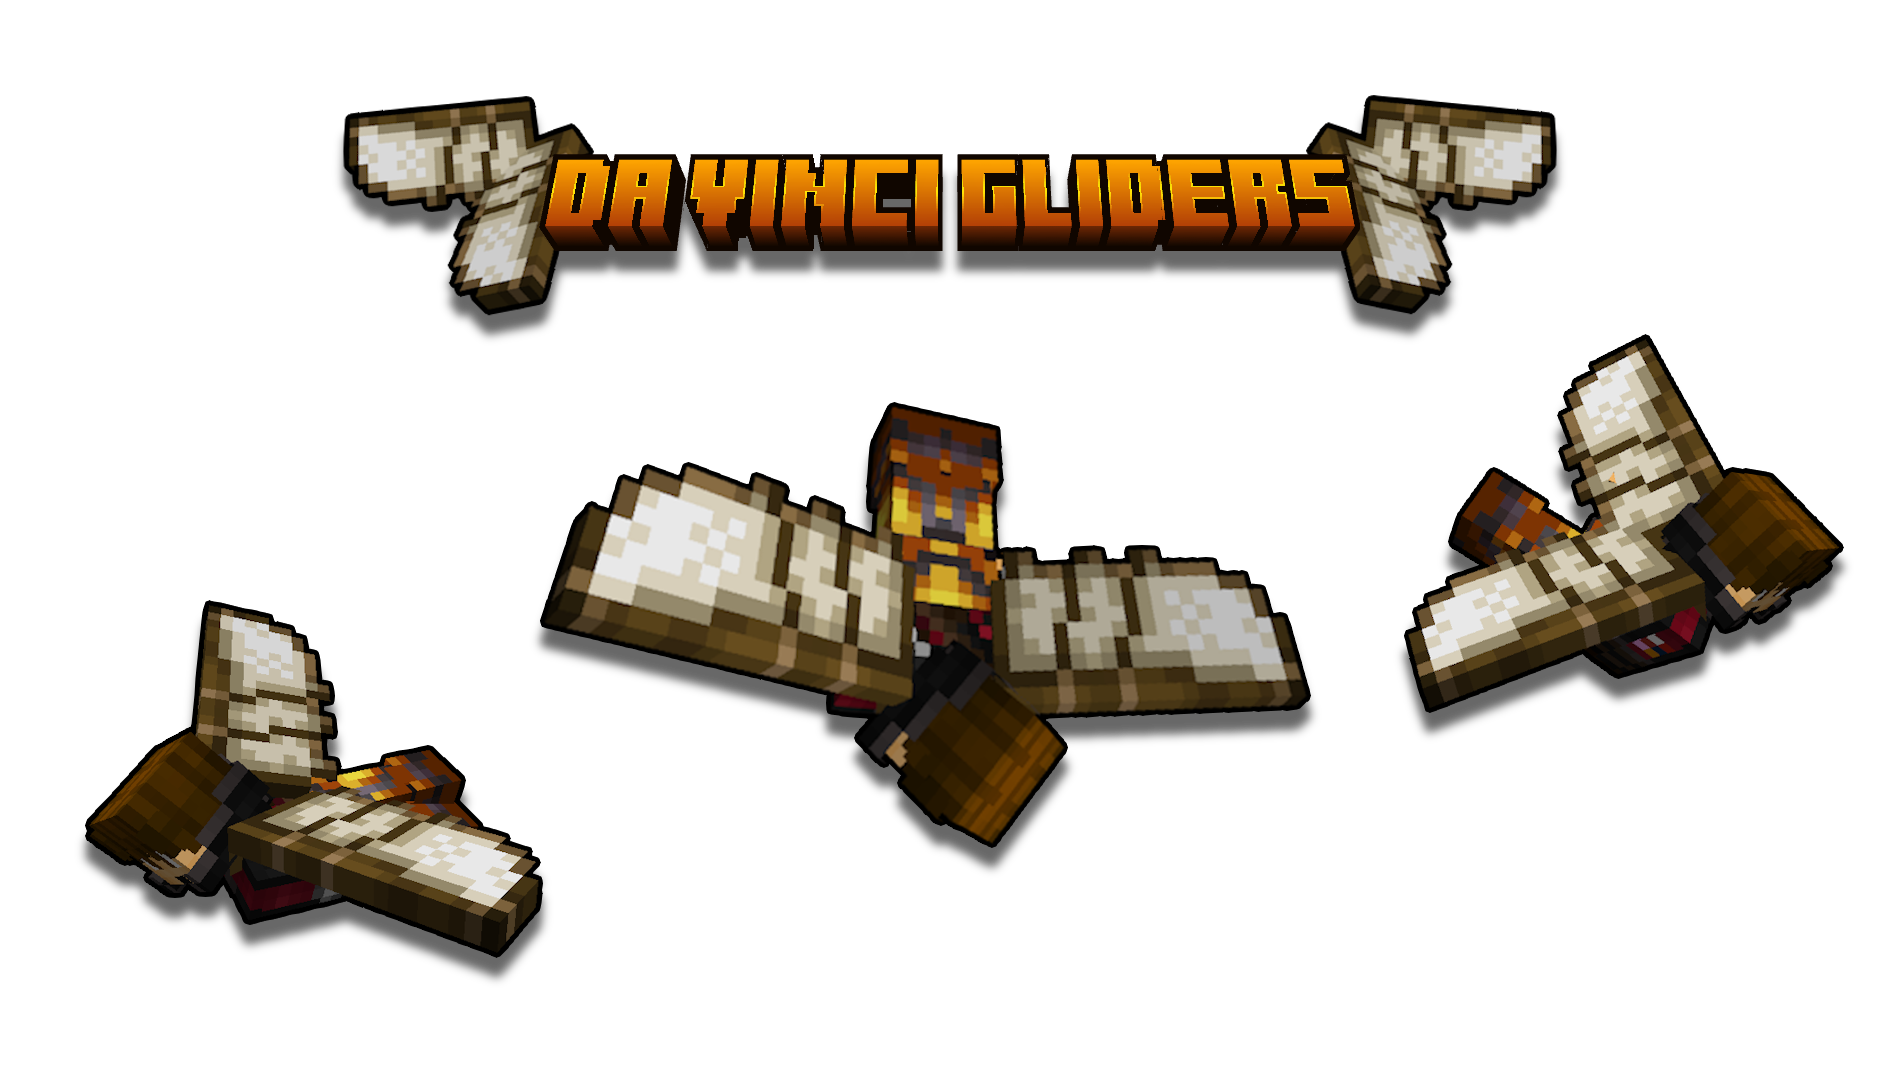 Da Vinci Gliders Minecraft Texture Pack